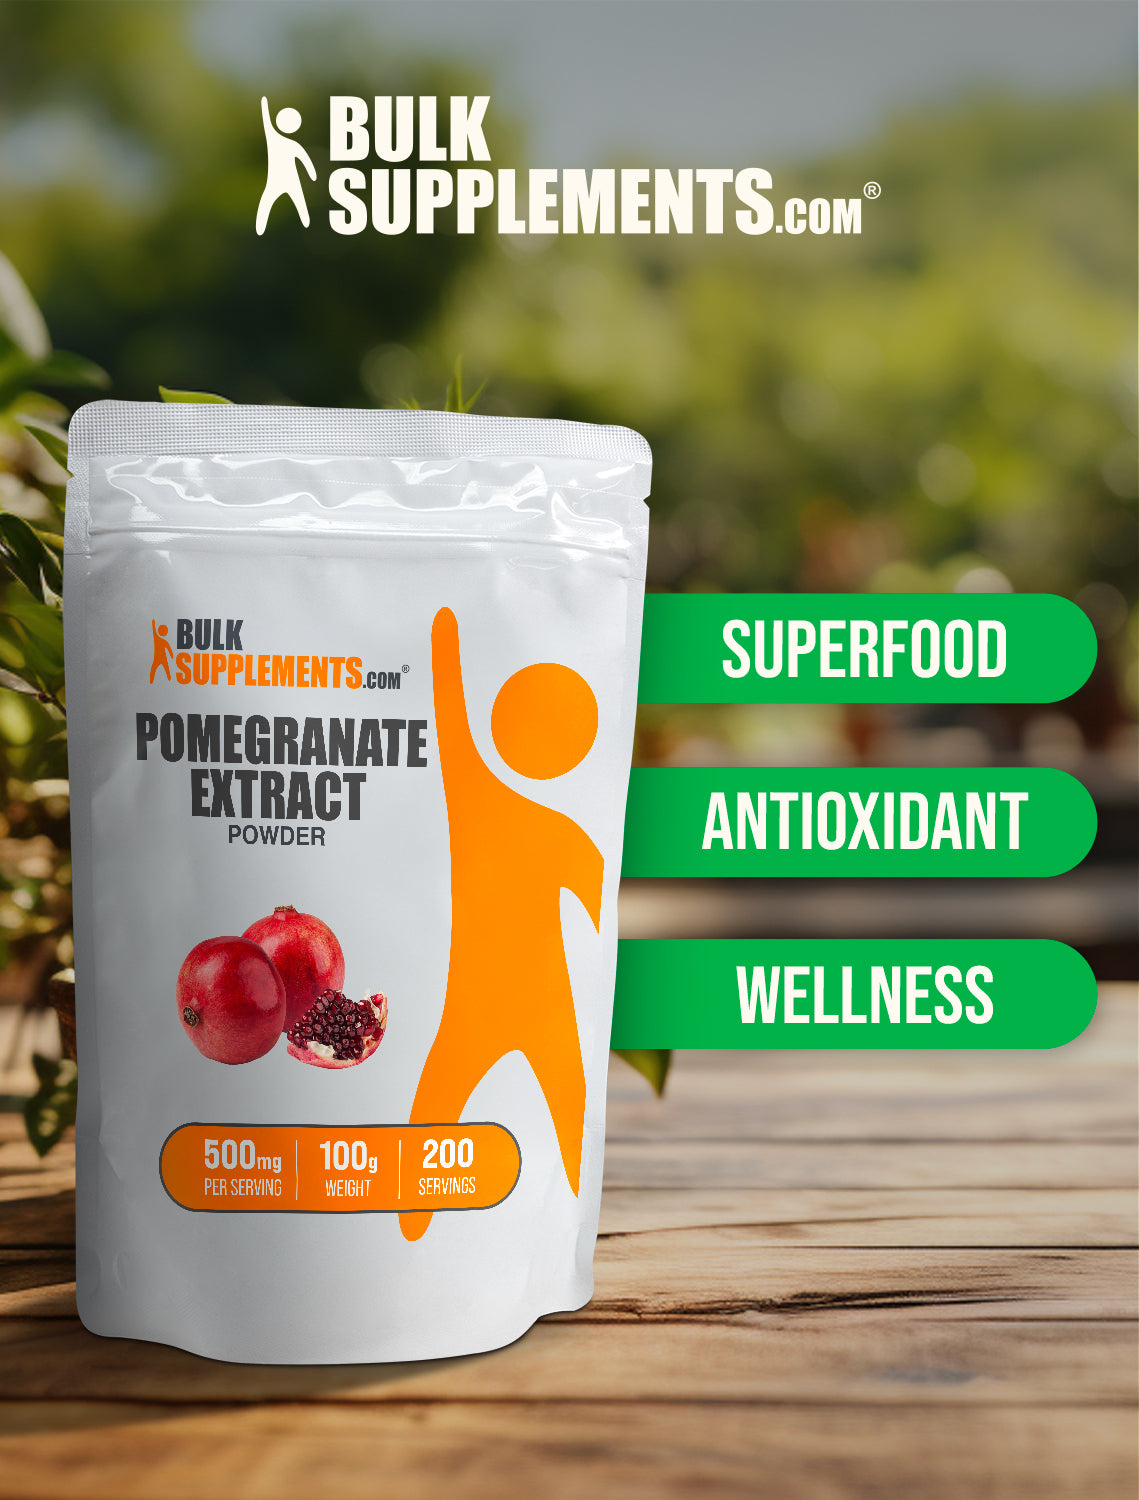 Pomegranate extract powder keyword image 100g